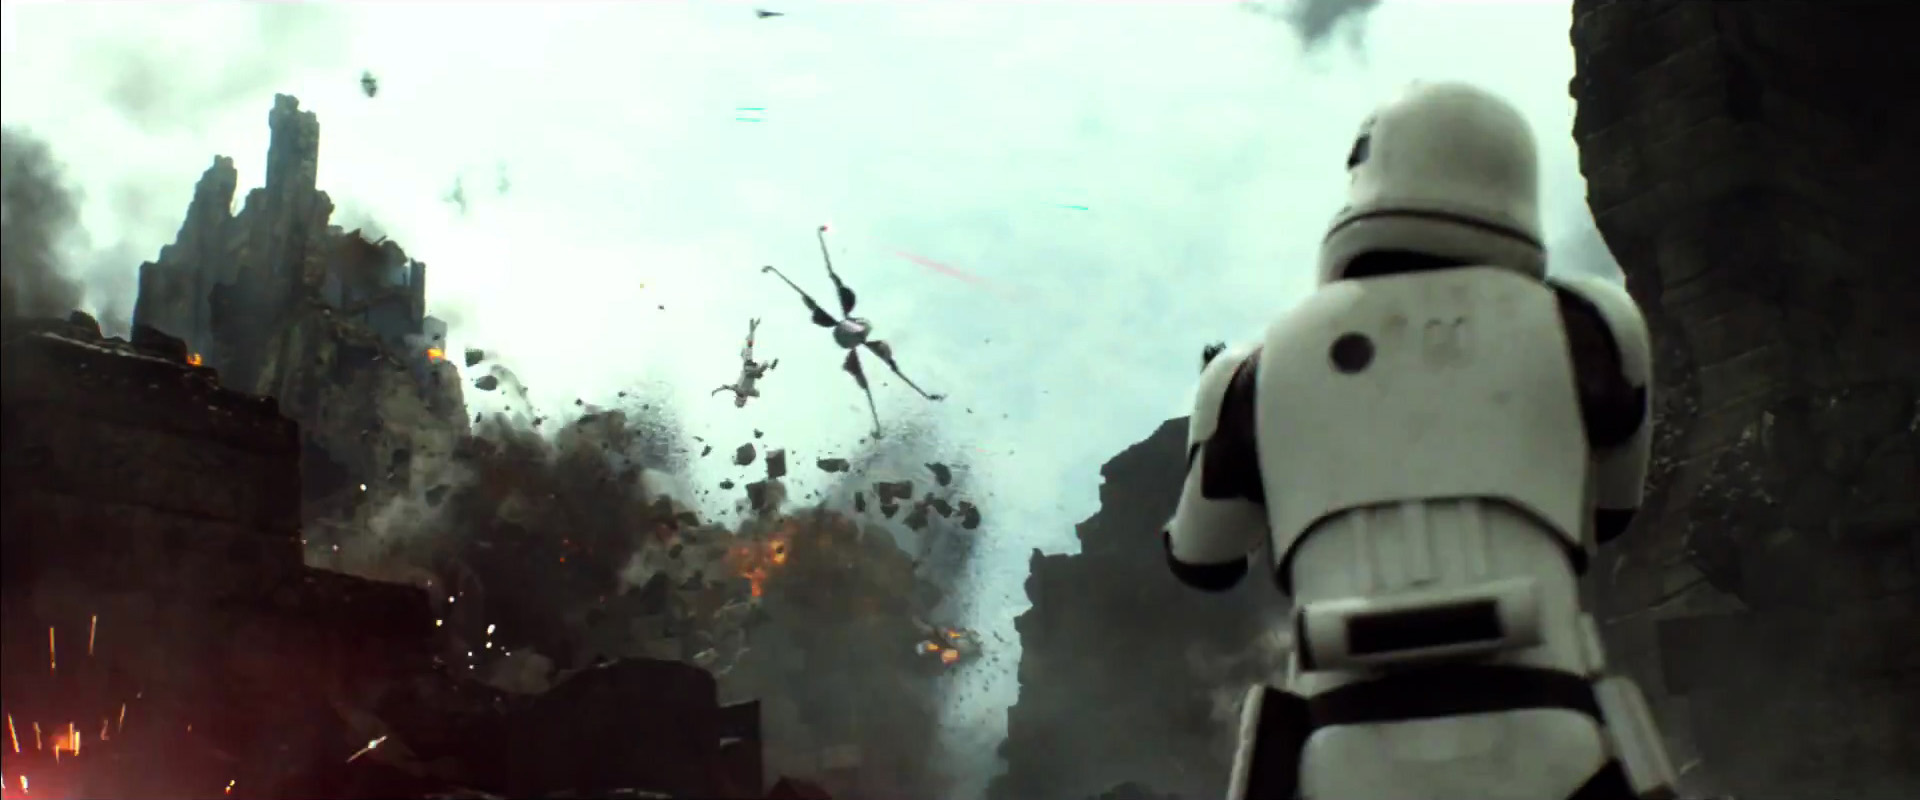 Star Wars  The Force Awakens Trailer (Official) 1 2750.jpg